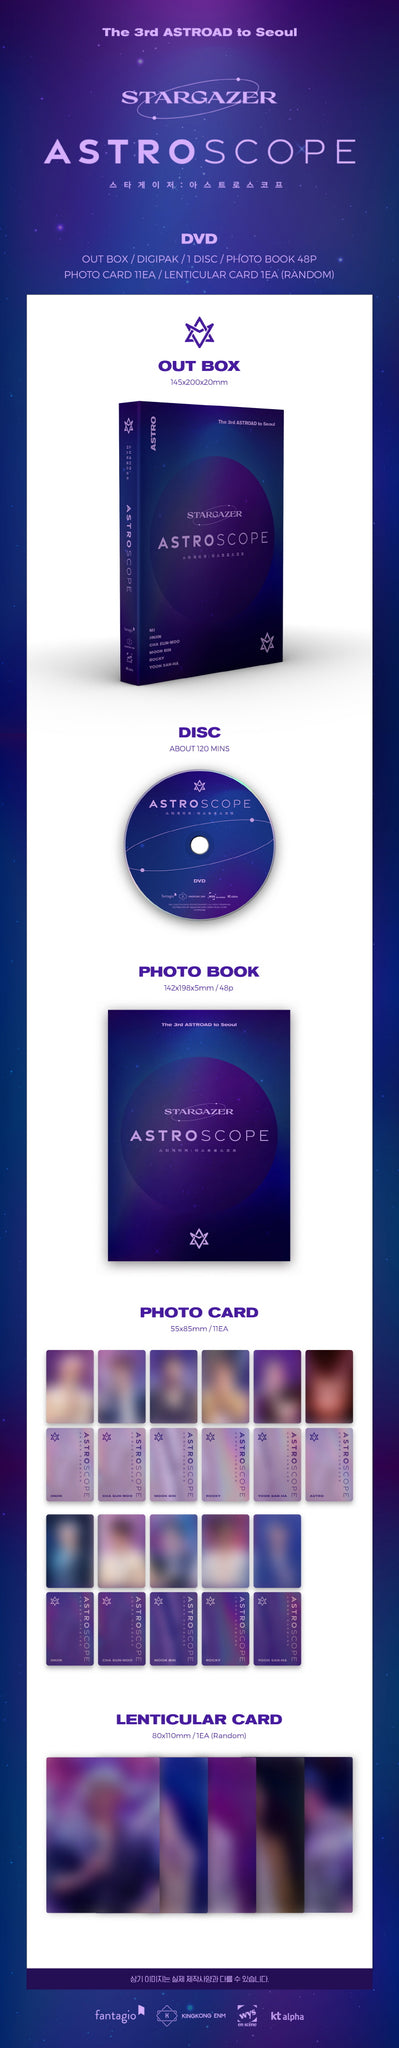 ASTRO - The 3rd ASTROAD to Seoul [ STARGAZER ] (DVD)